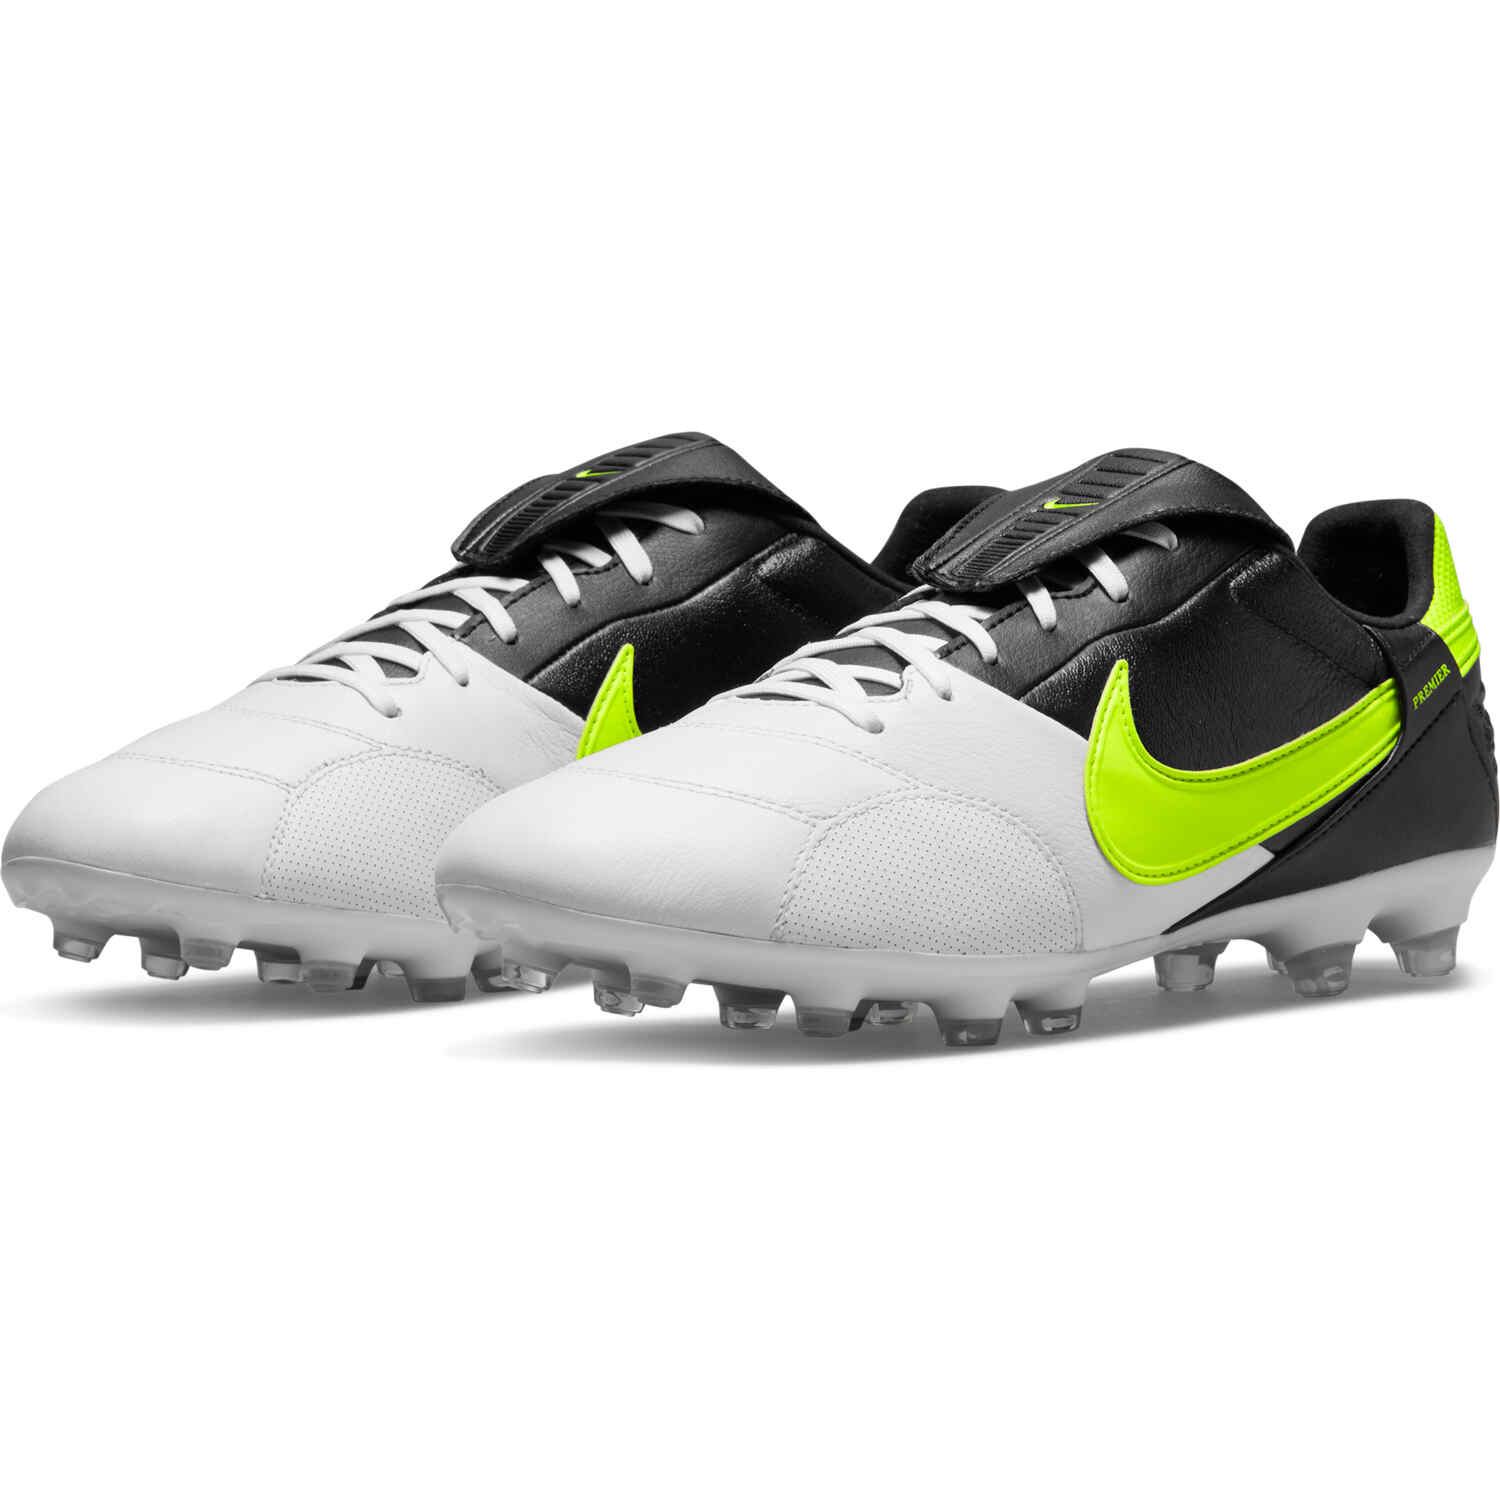 Nike Premier III FG - Black & Volt with White - SoccerPro